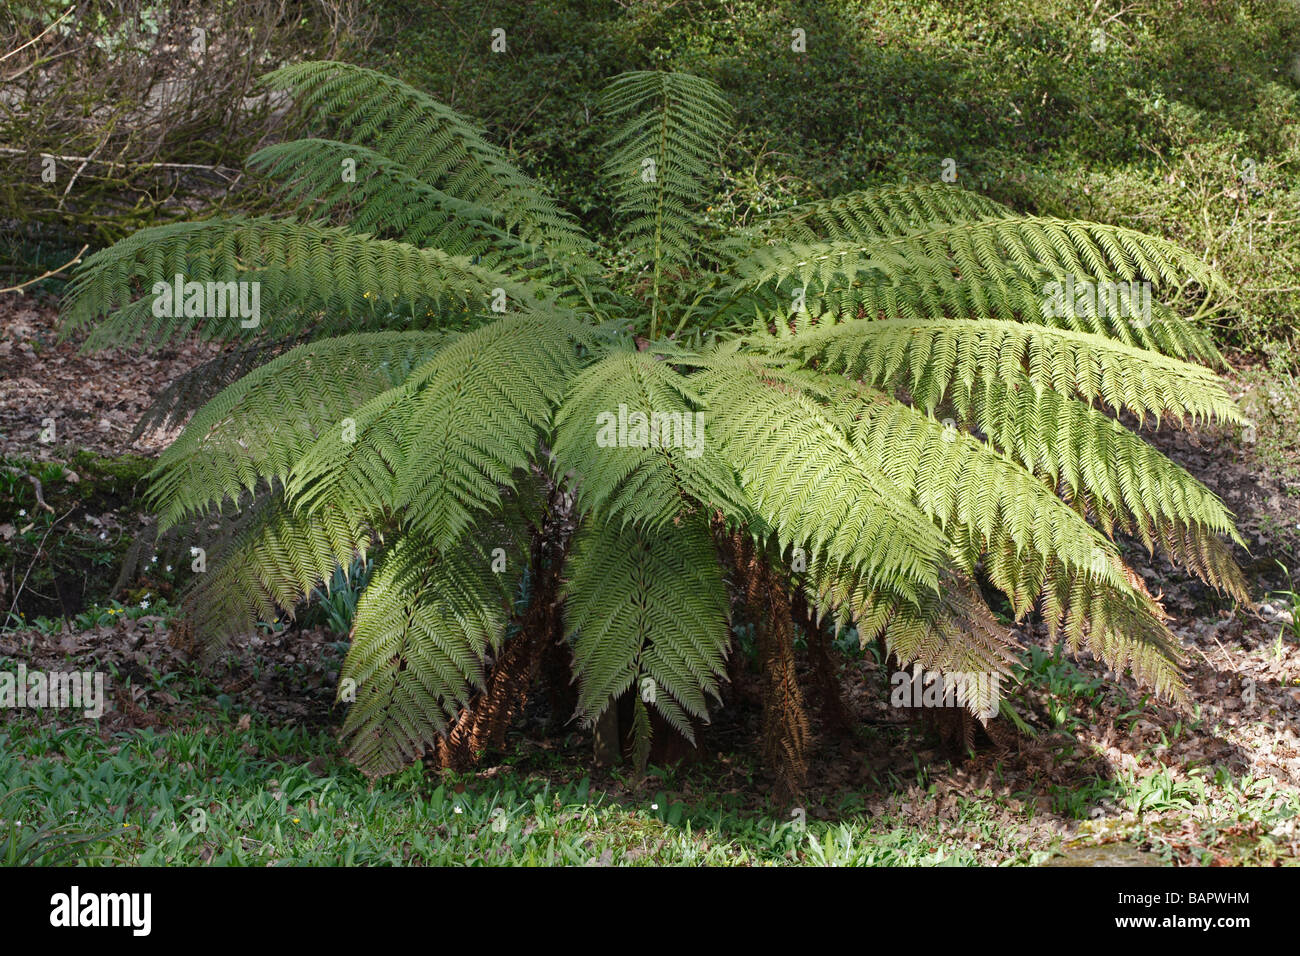 TREE FERN Cyathea australis CLOSE UP OF PLANT Stock Photo